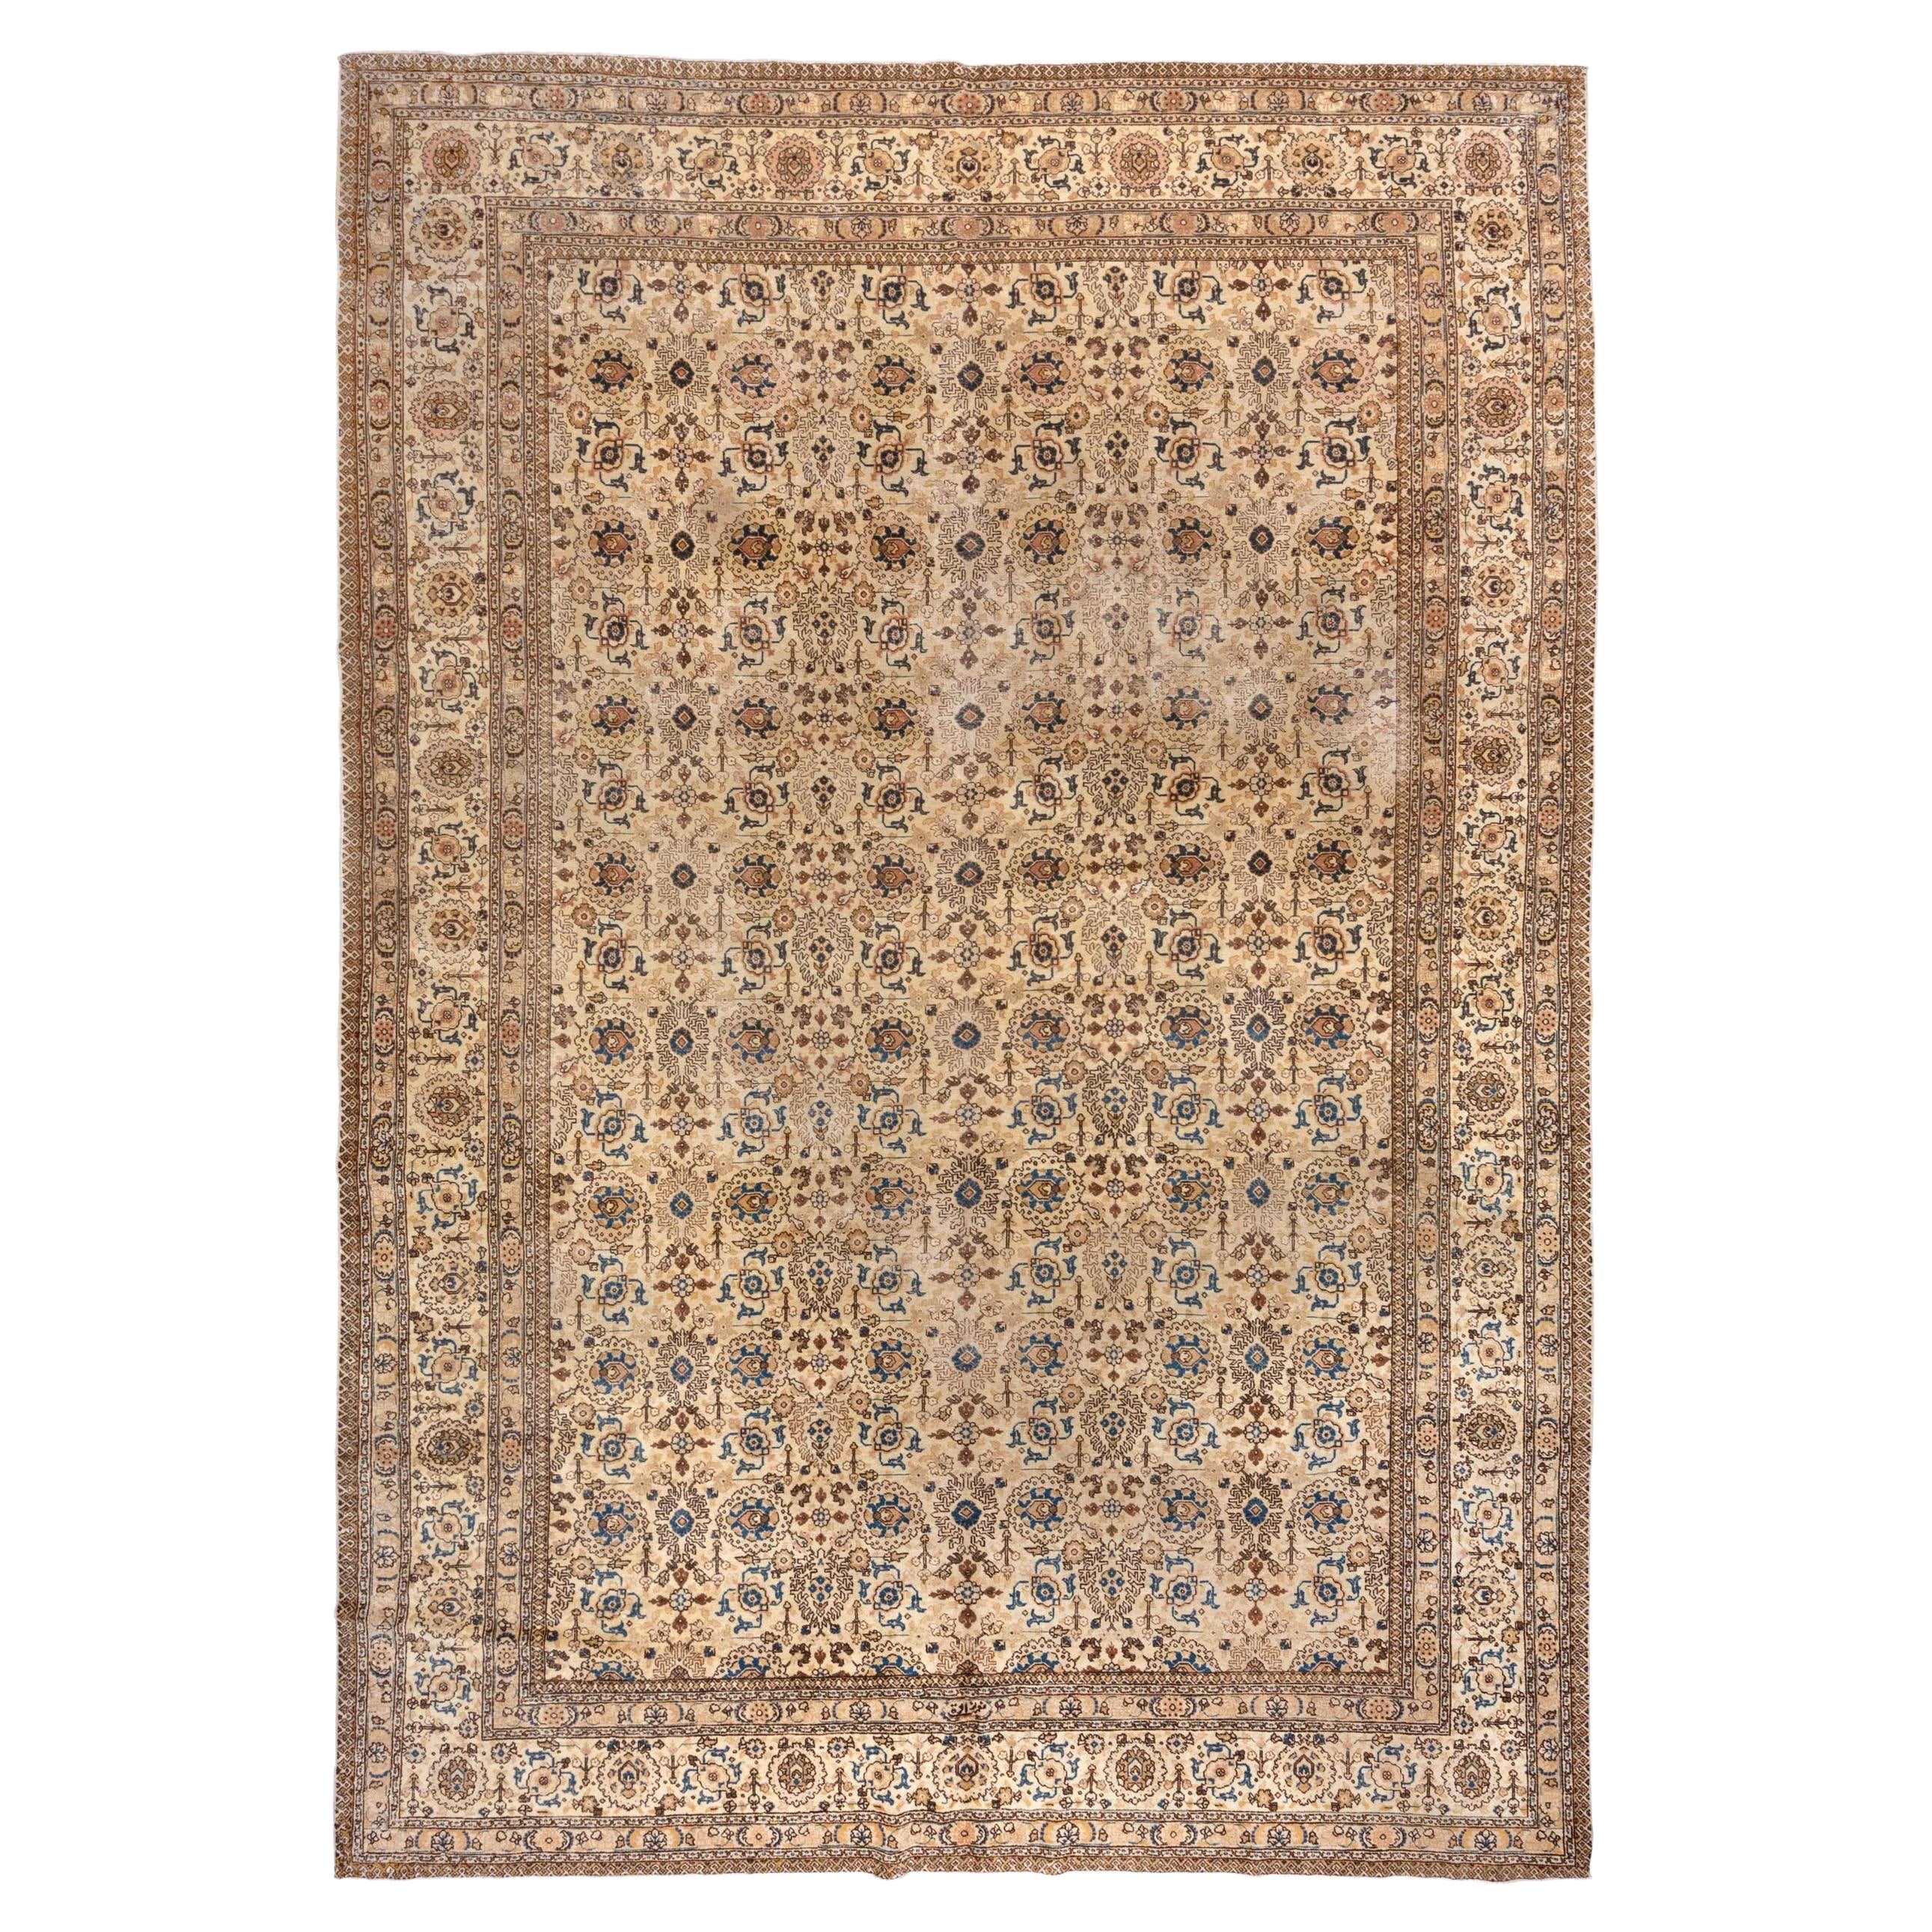 Antique Persian Tabriz Carpet, circa 1930s